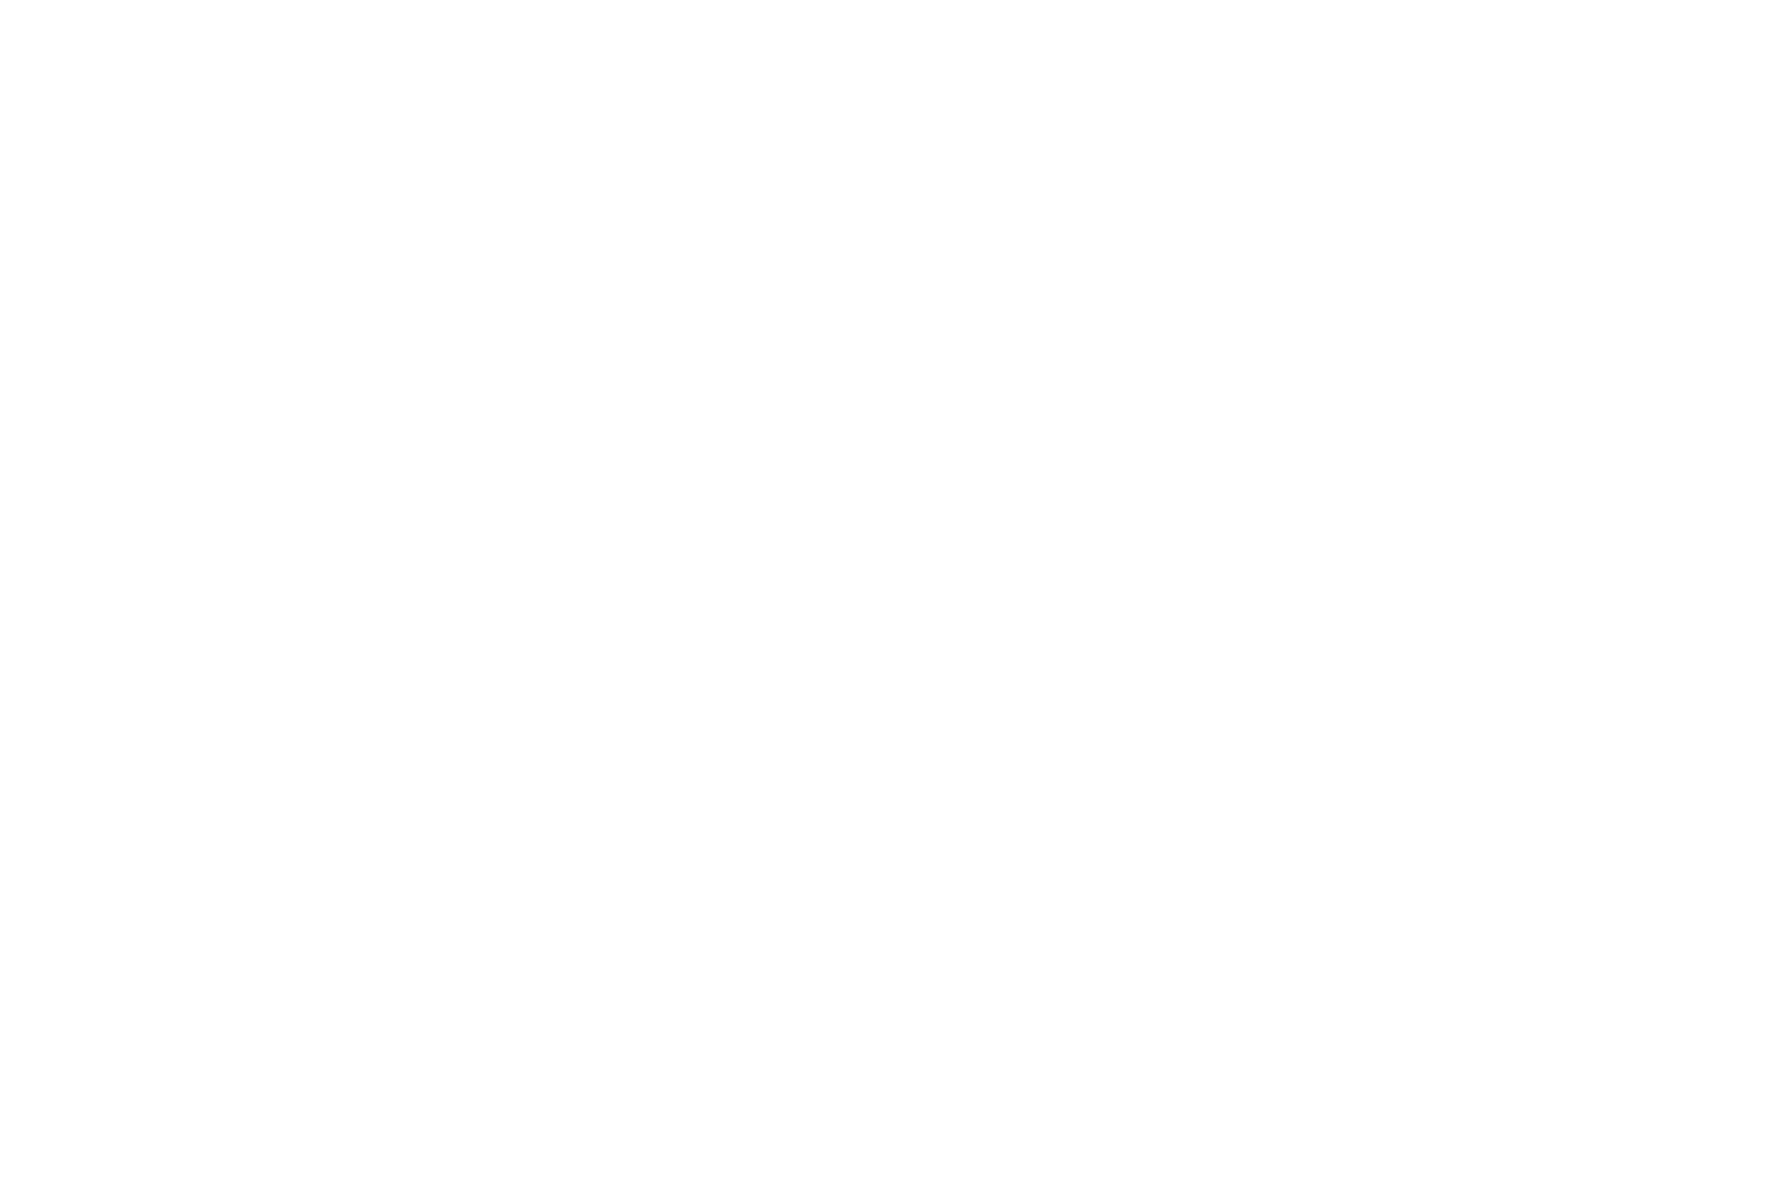 Area Financial Services